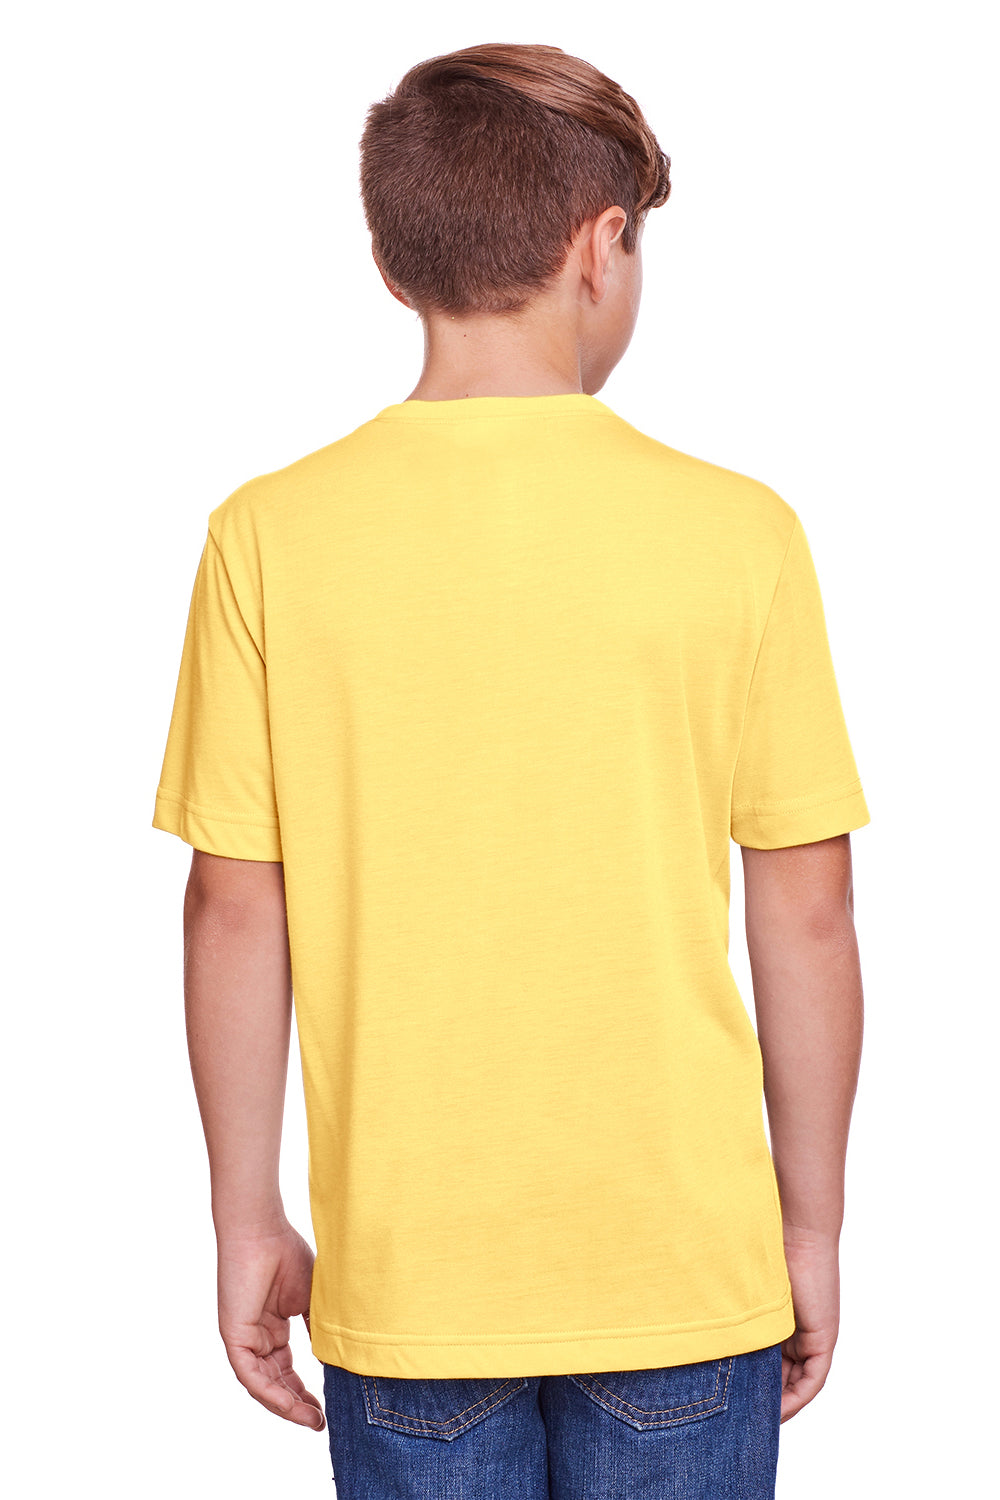 Core 365 CE111Y Youth Fusion ChromaSoft Performance Moisture Wicking Short Sleeve Crewneck T-Shirt Gold Back